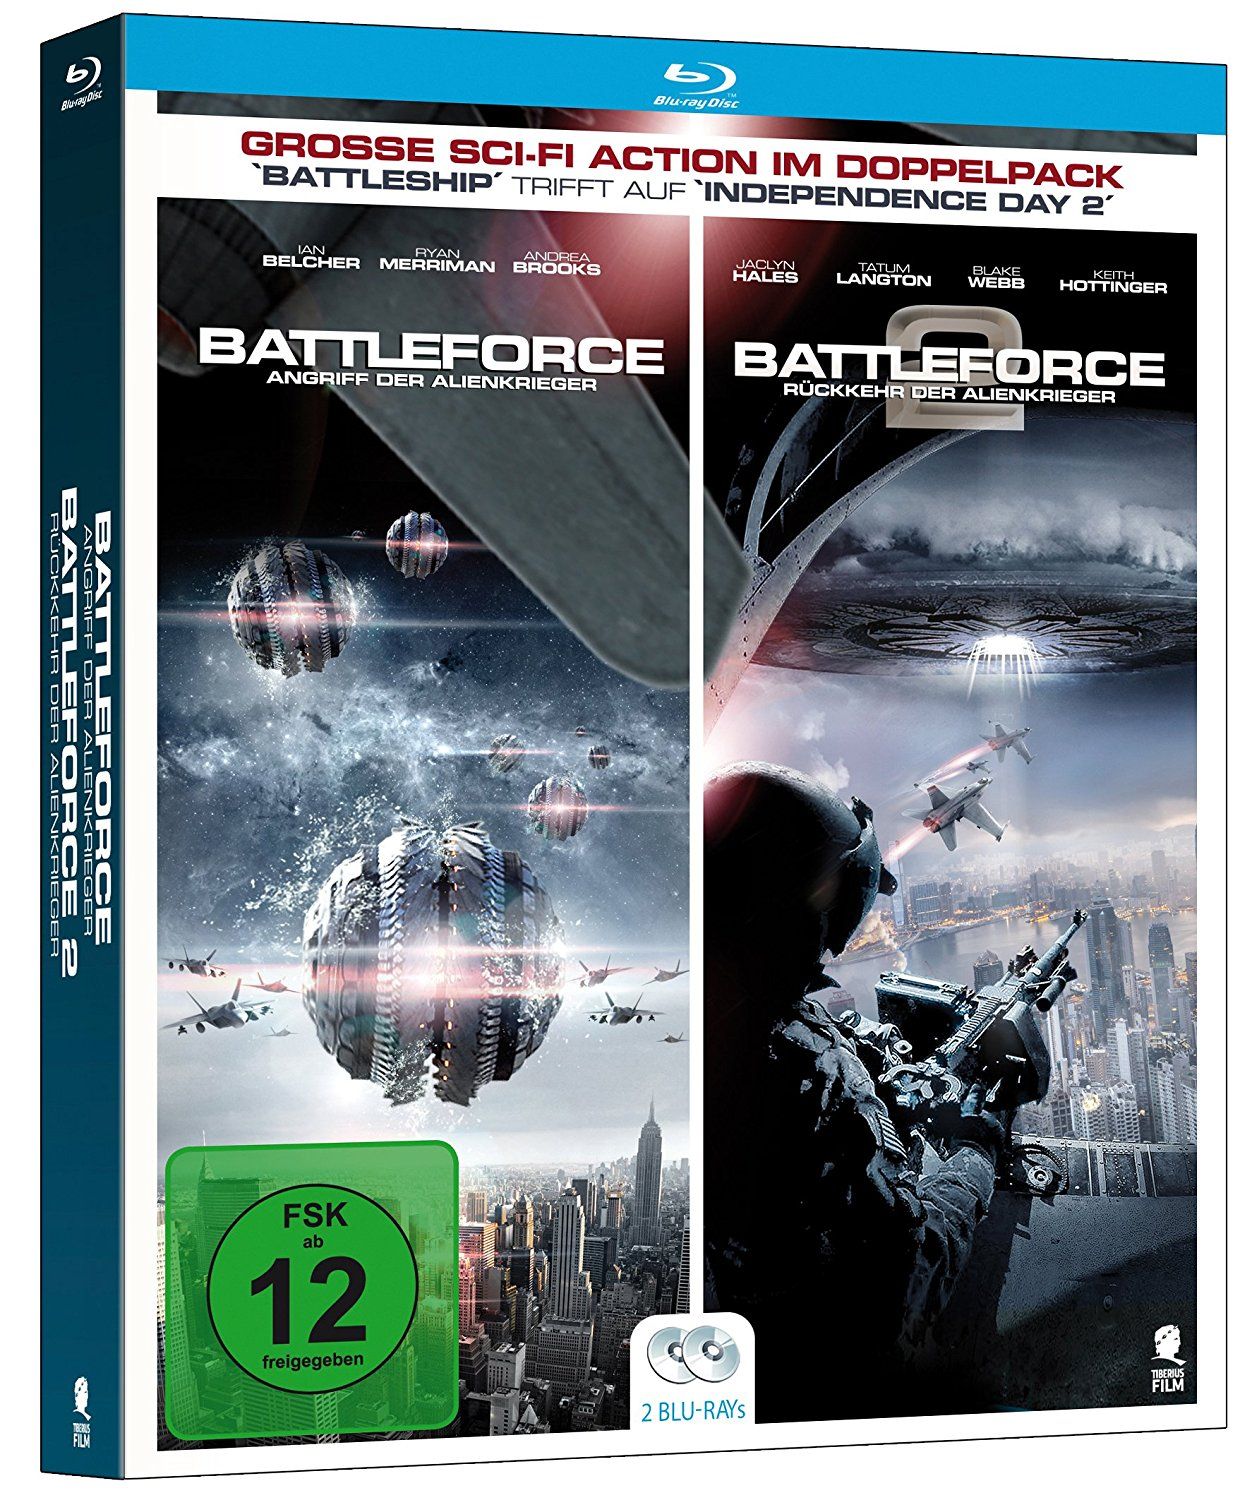 Battleforce - Angriff der Alienkrieger / Battleforce 2 - Rückkehr der Alienkrieger (Double Feature) (2 Discs) (BLURAY)